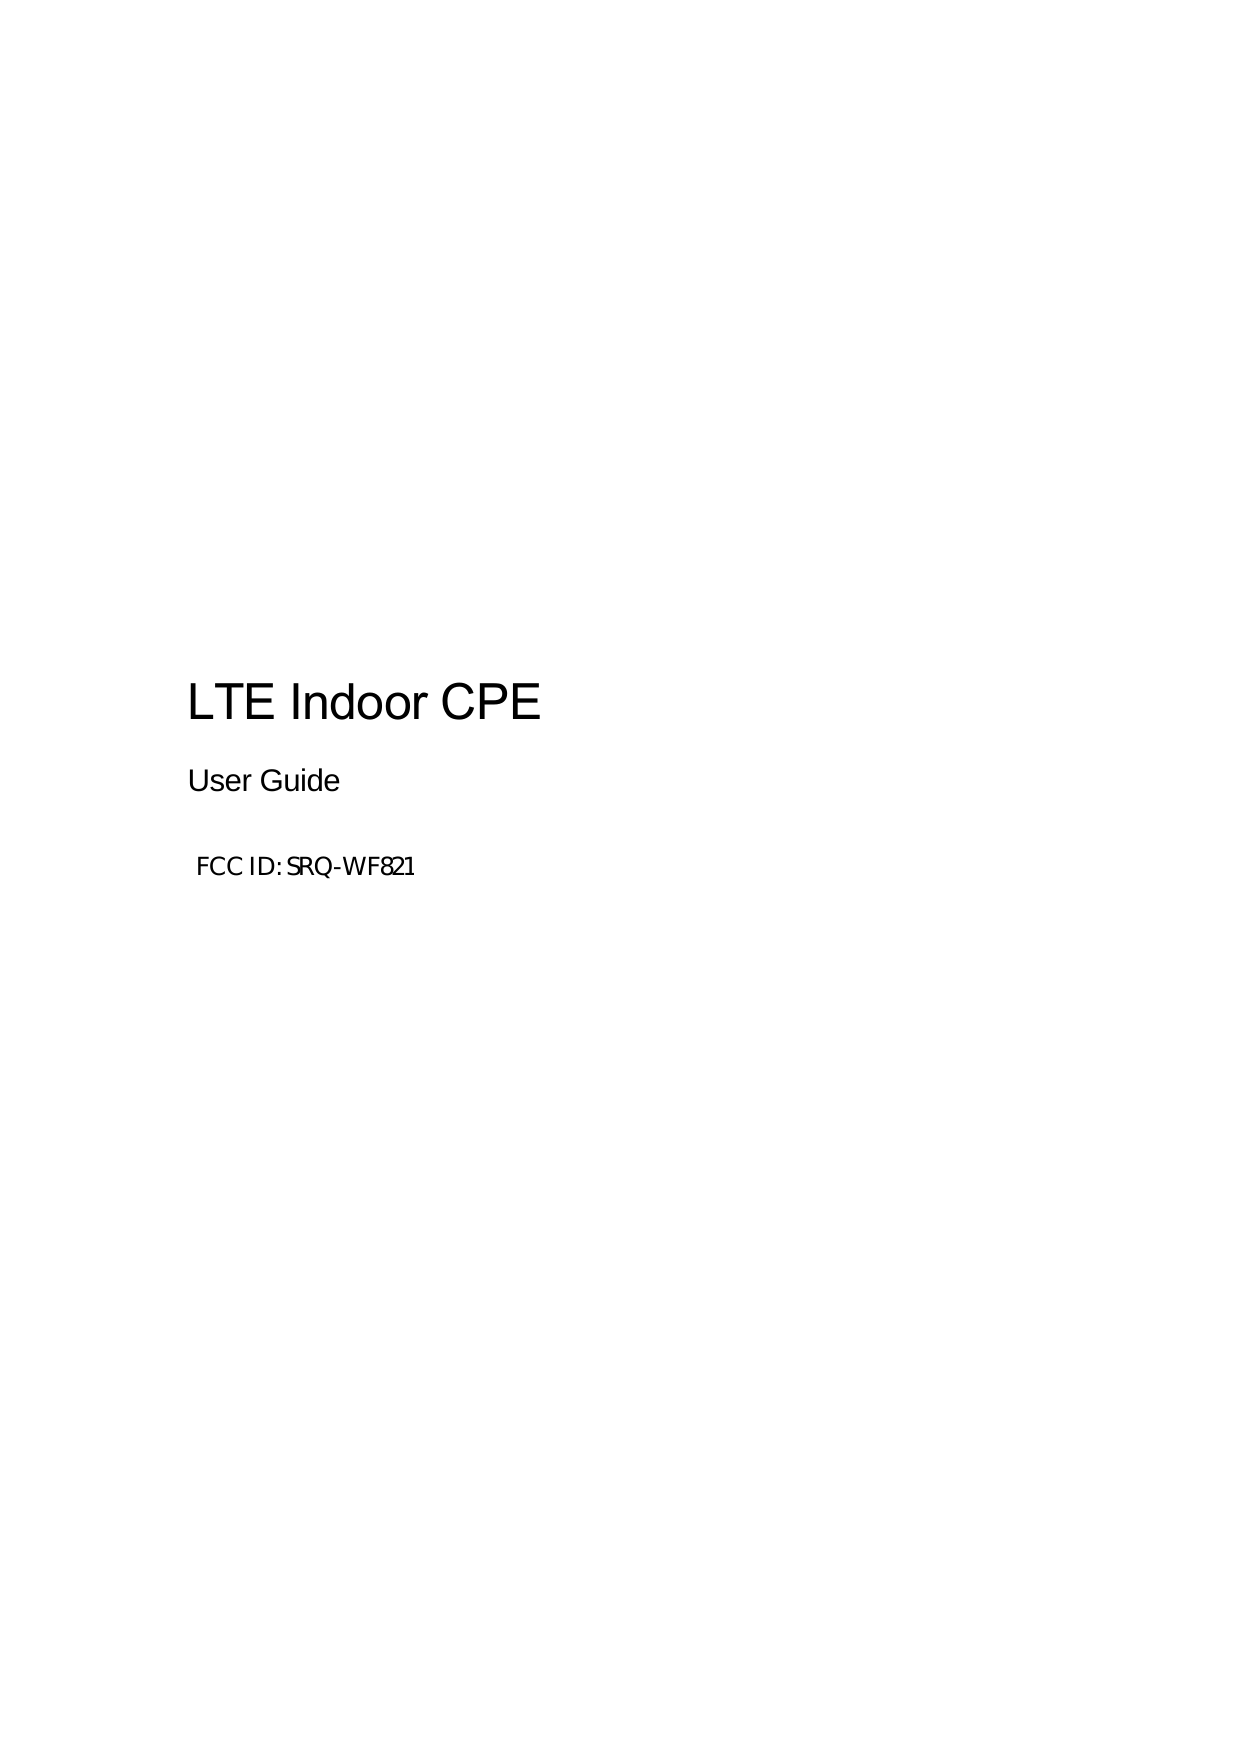       LTE Indoor CPE User Guide FCC ID: SRQ-WF821